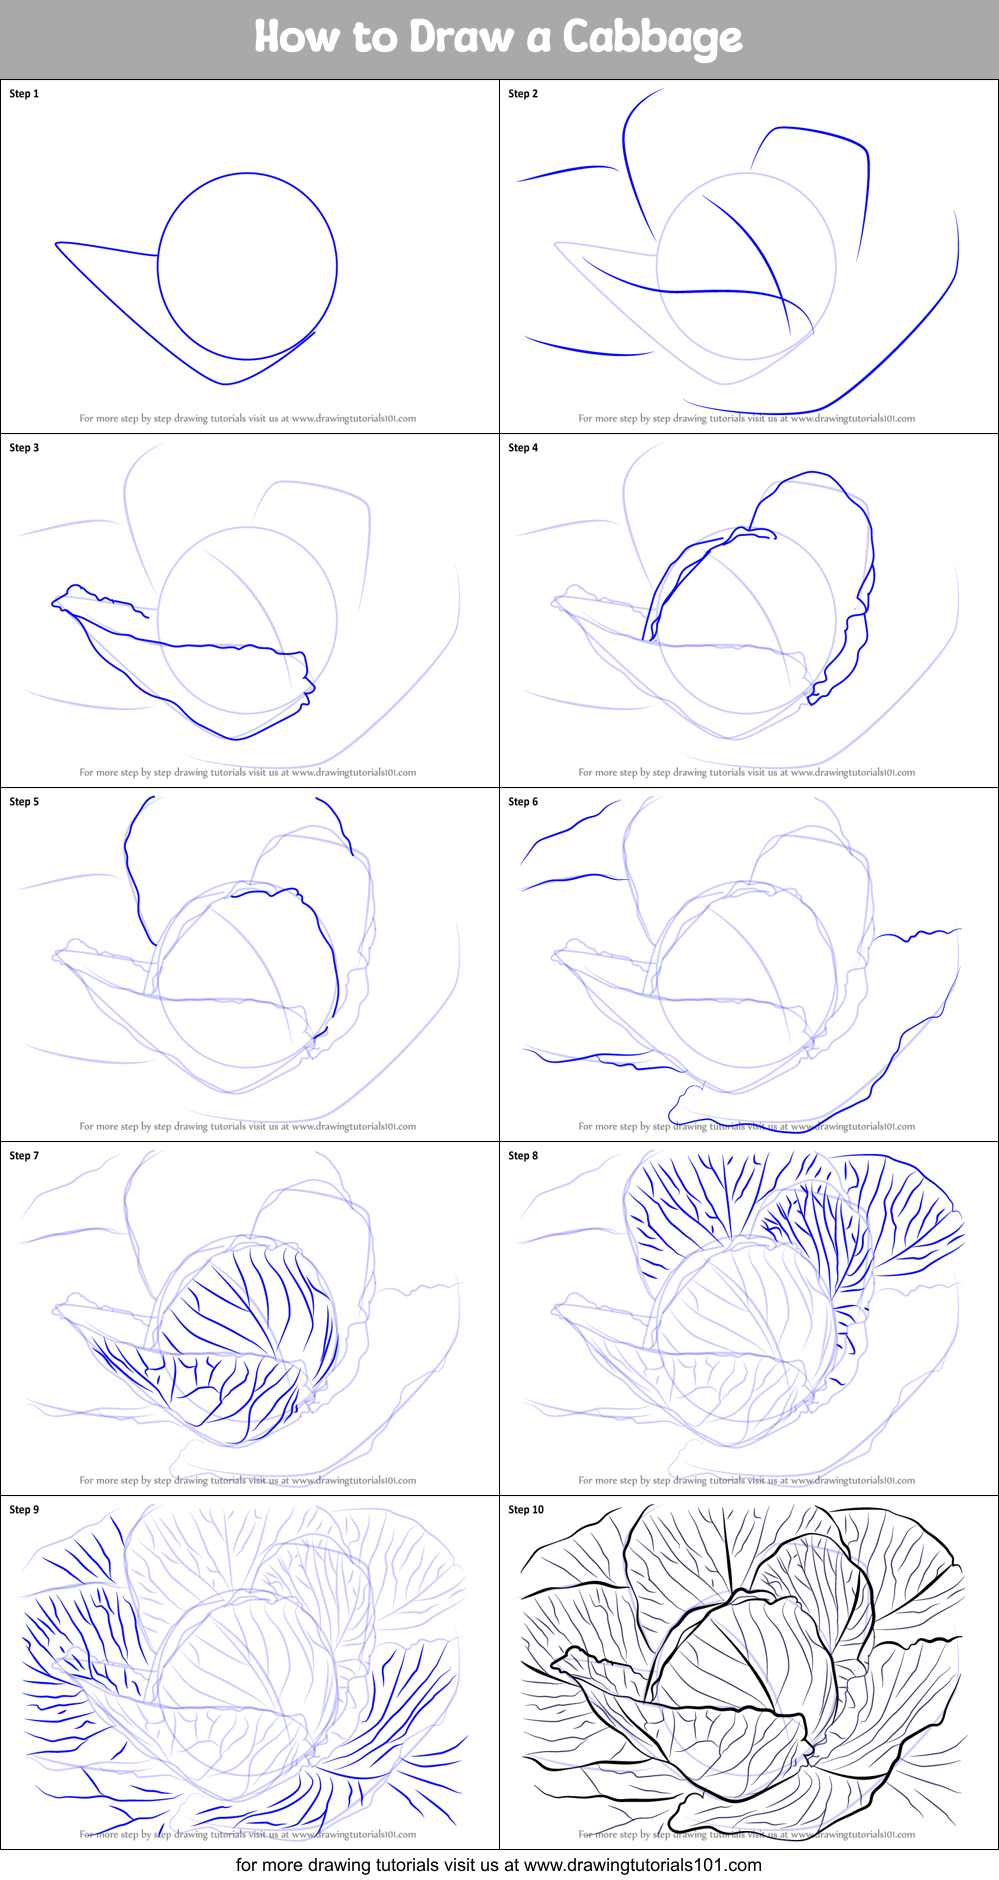 Cabbage Drawing Images  Free Download on Freepik